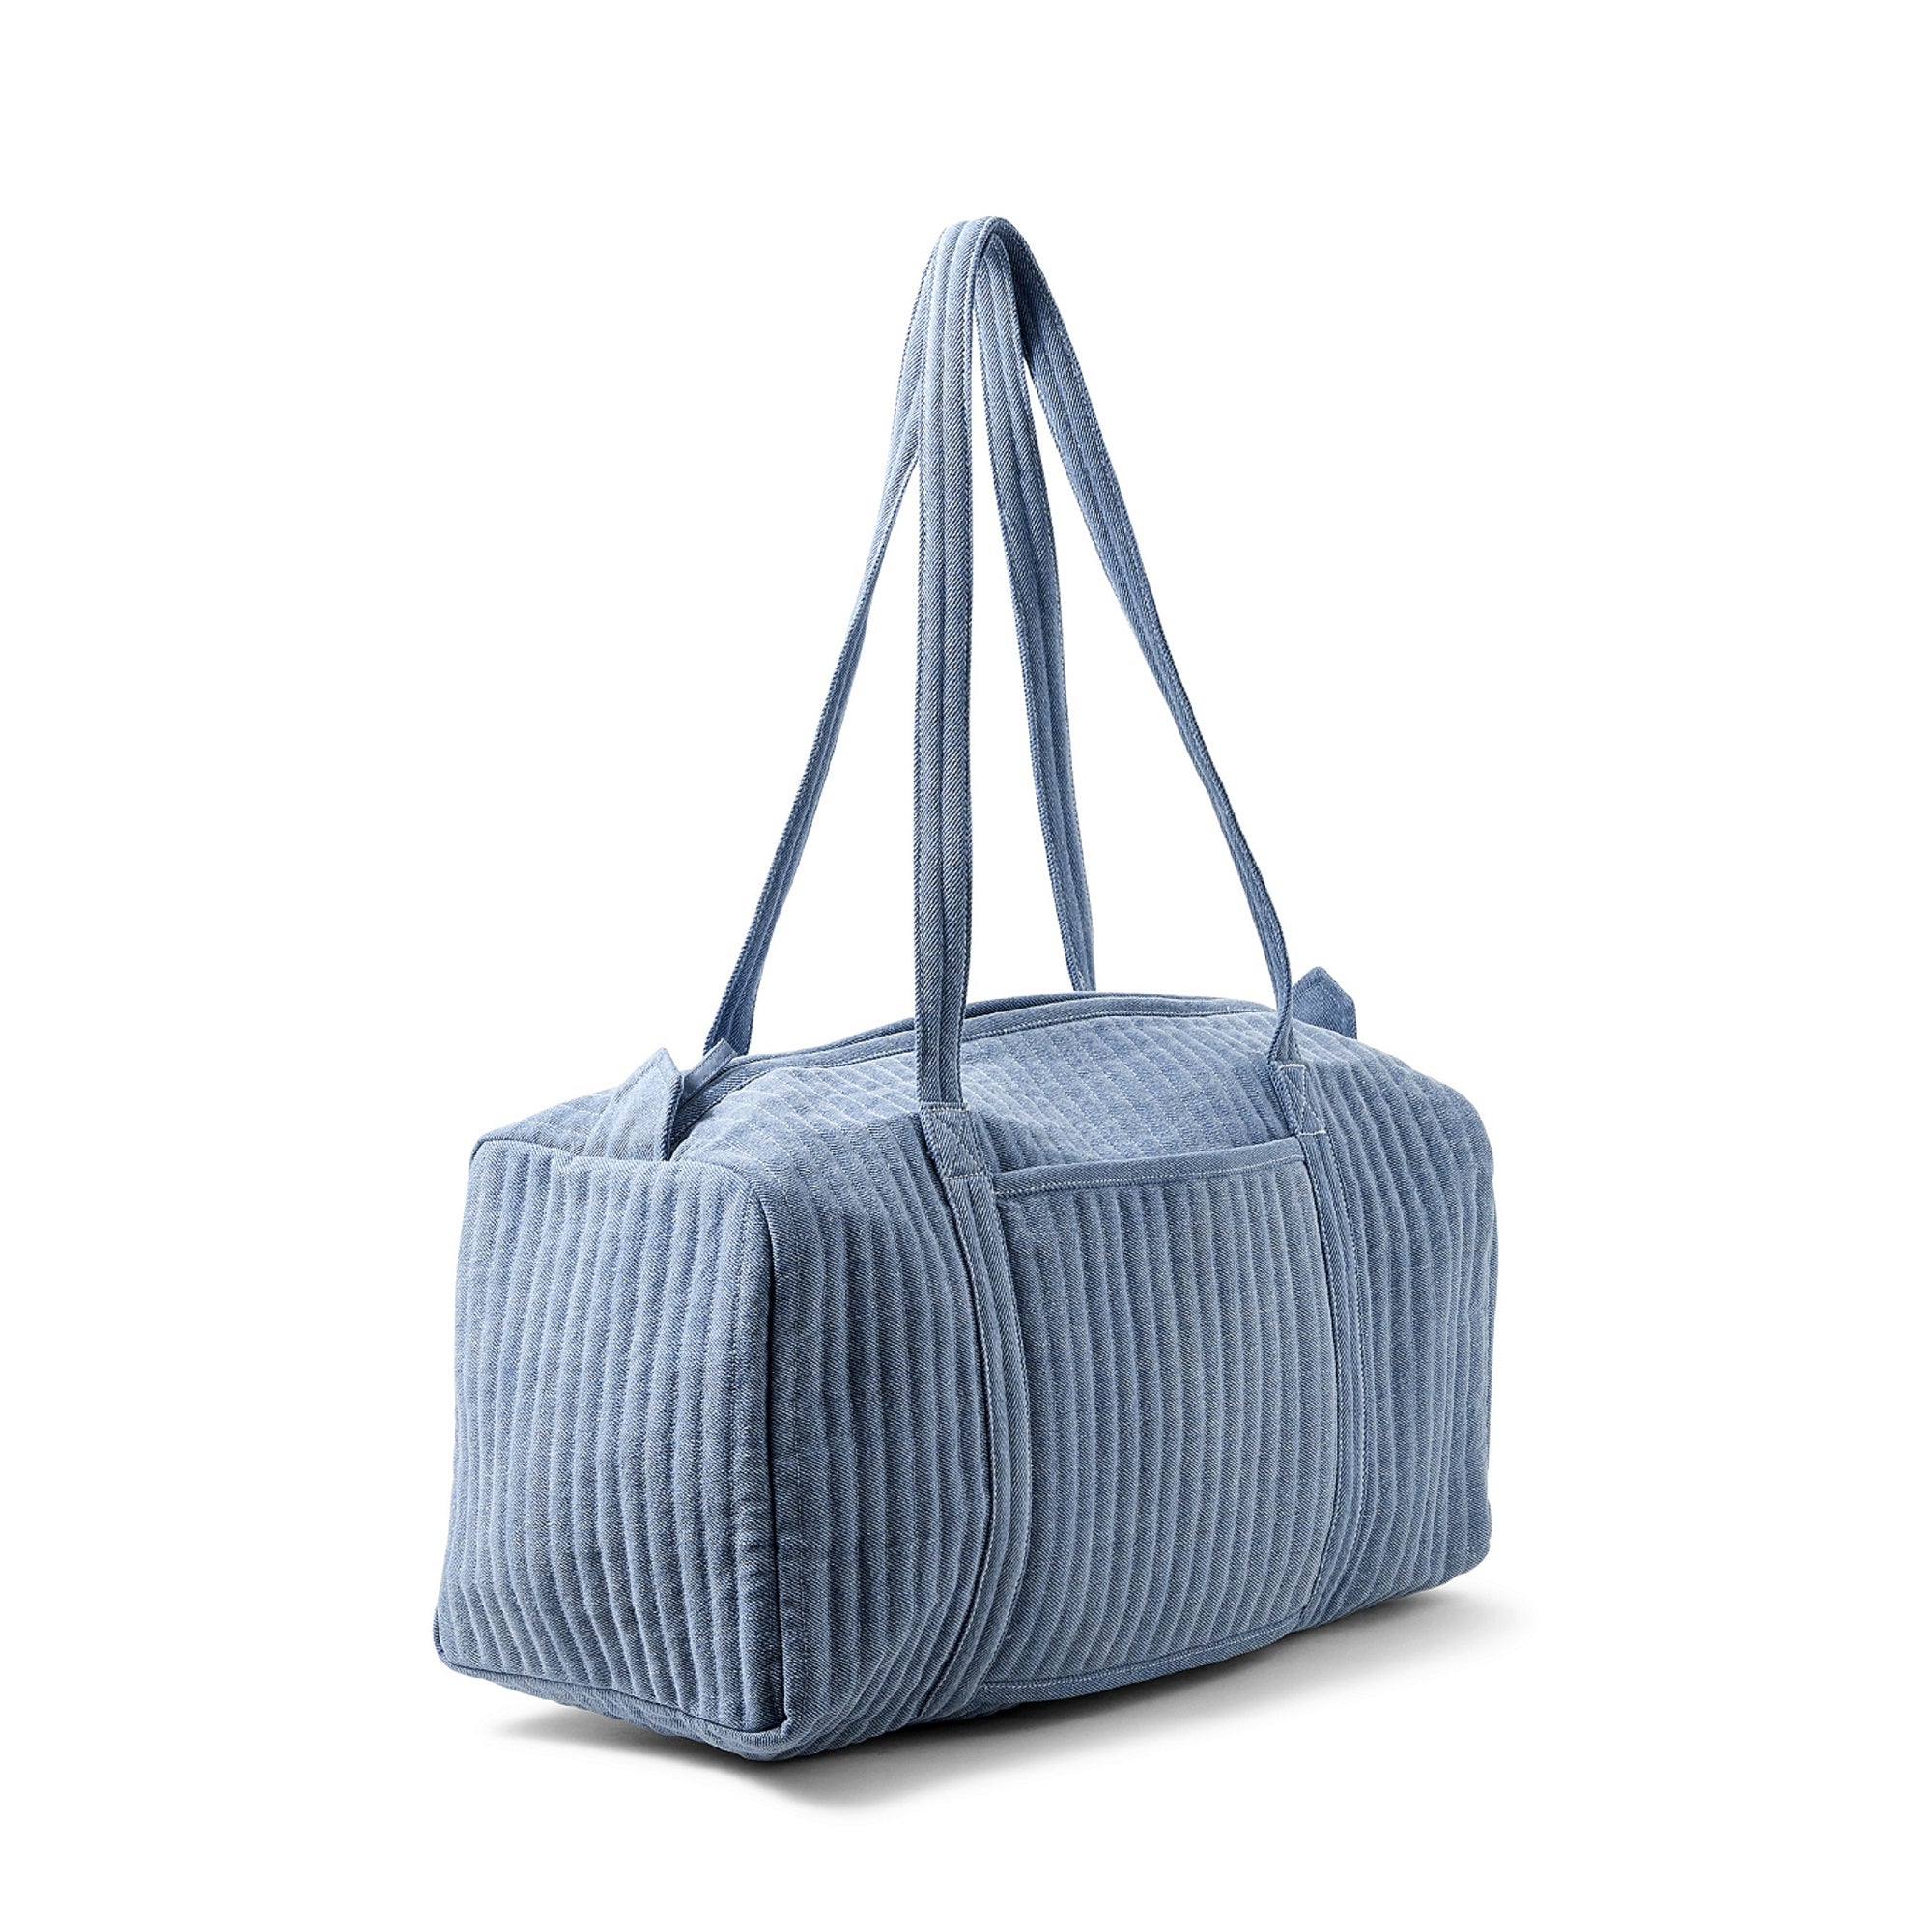 Accessorize London women's Blue Denim Weekender Travel bag